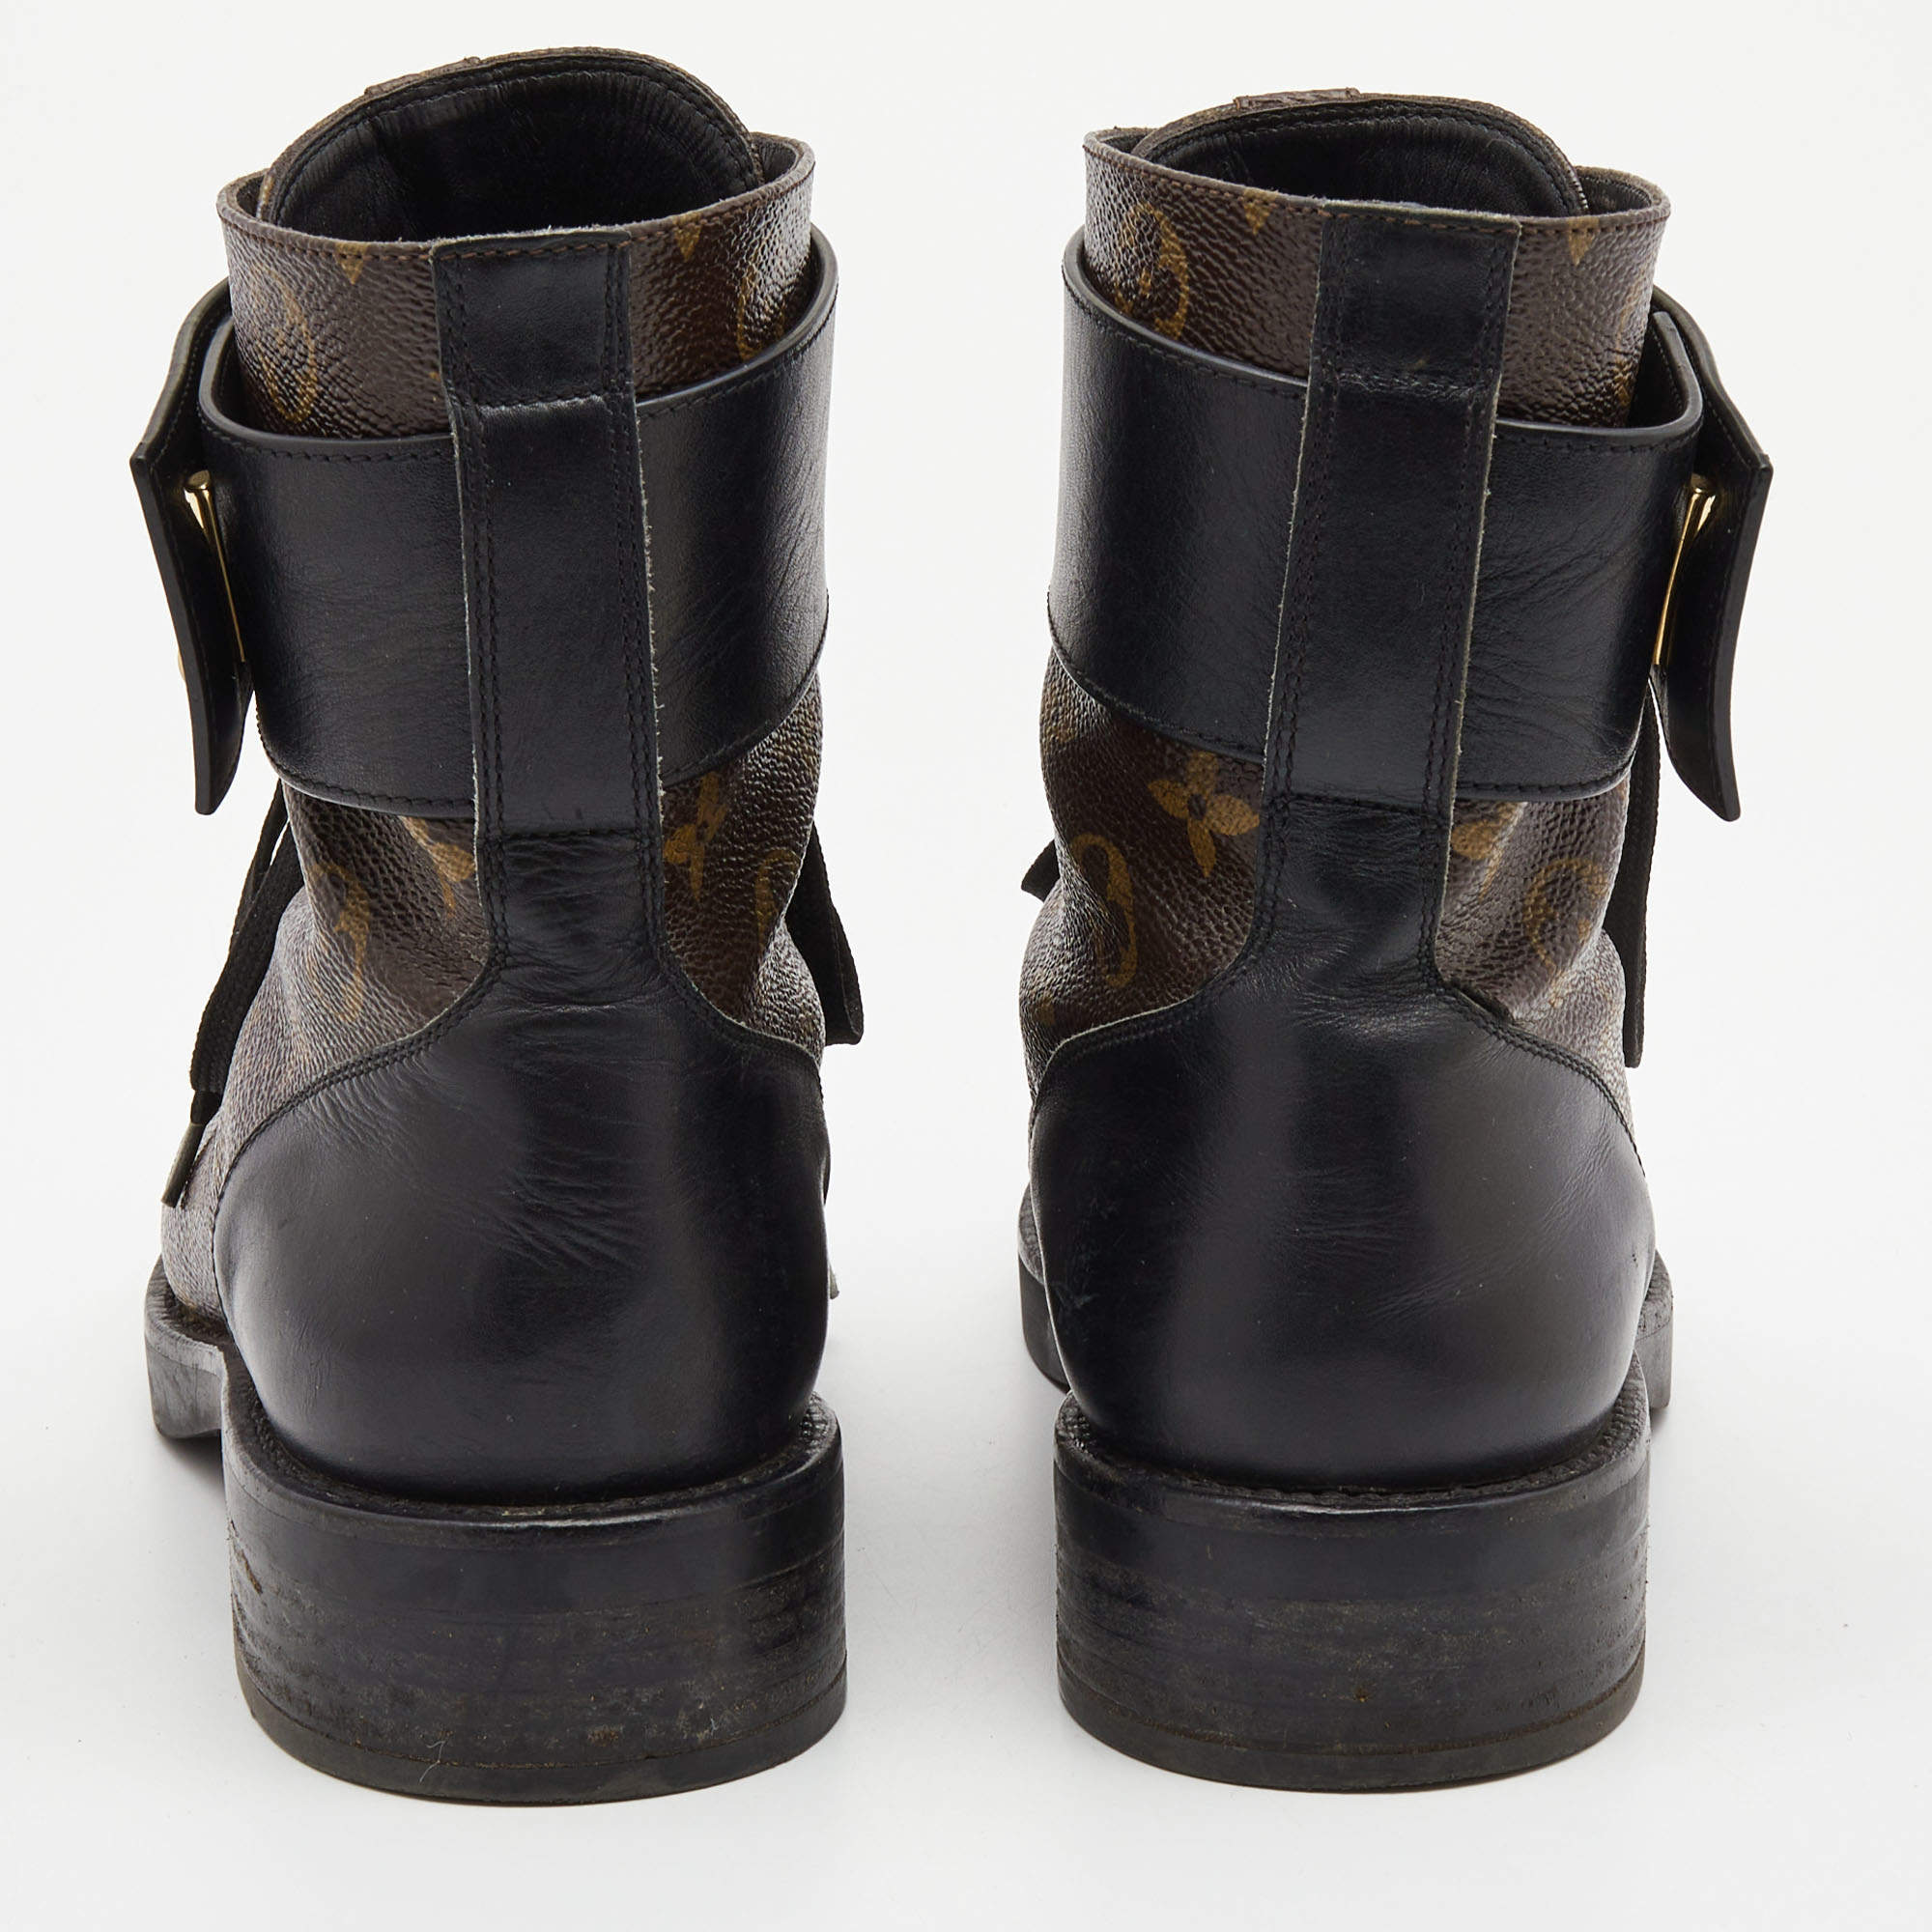 Wonderland leather biker boots Louis Vuitton Brown size 36.5 EU in Leather  - 32151425